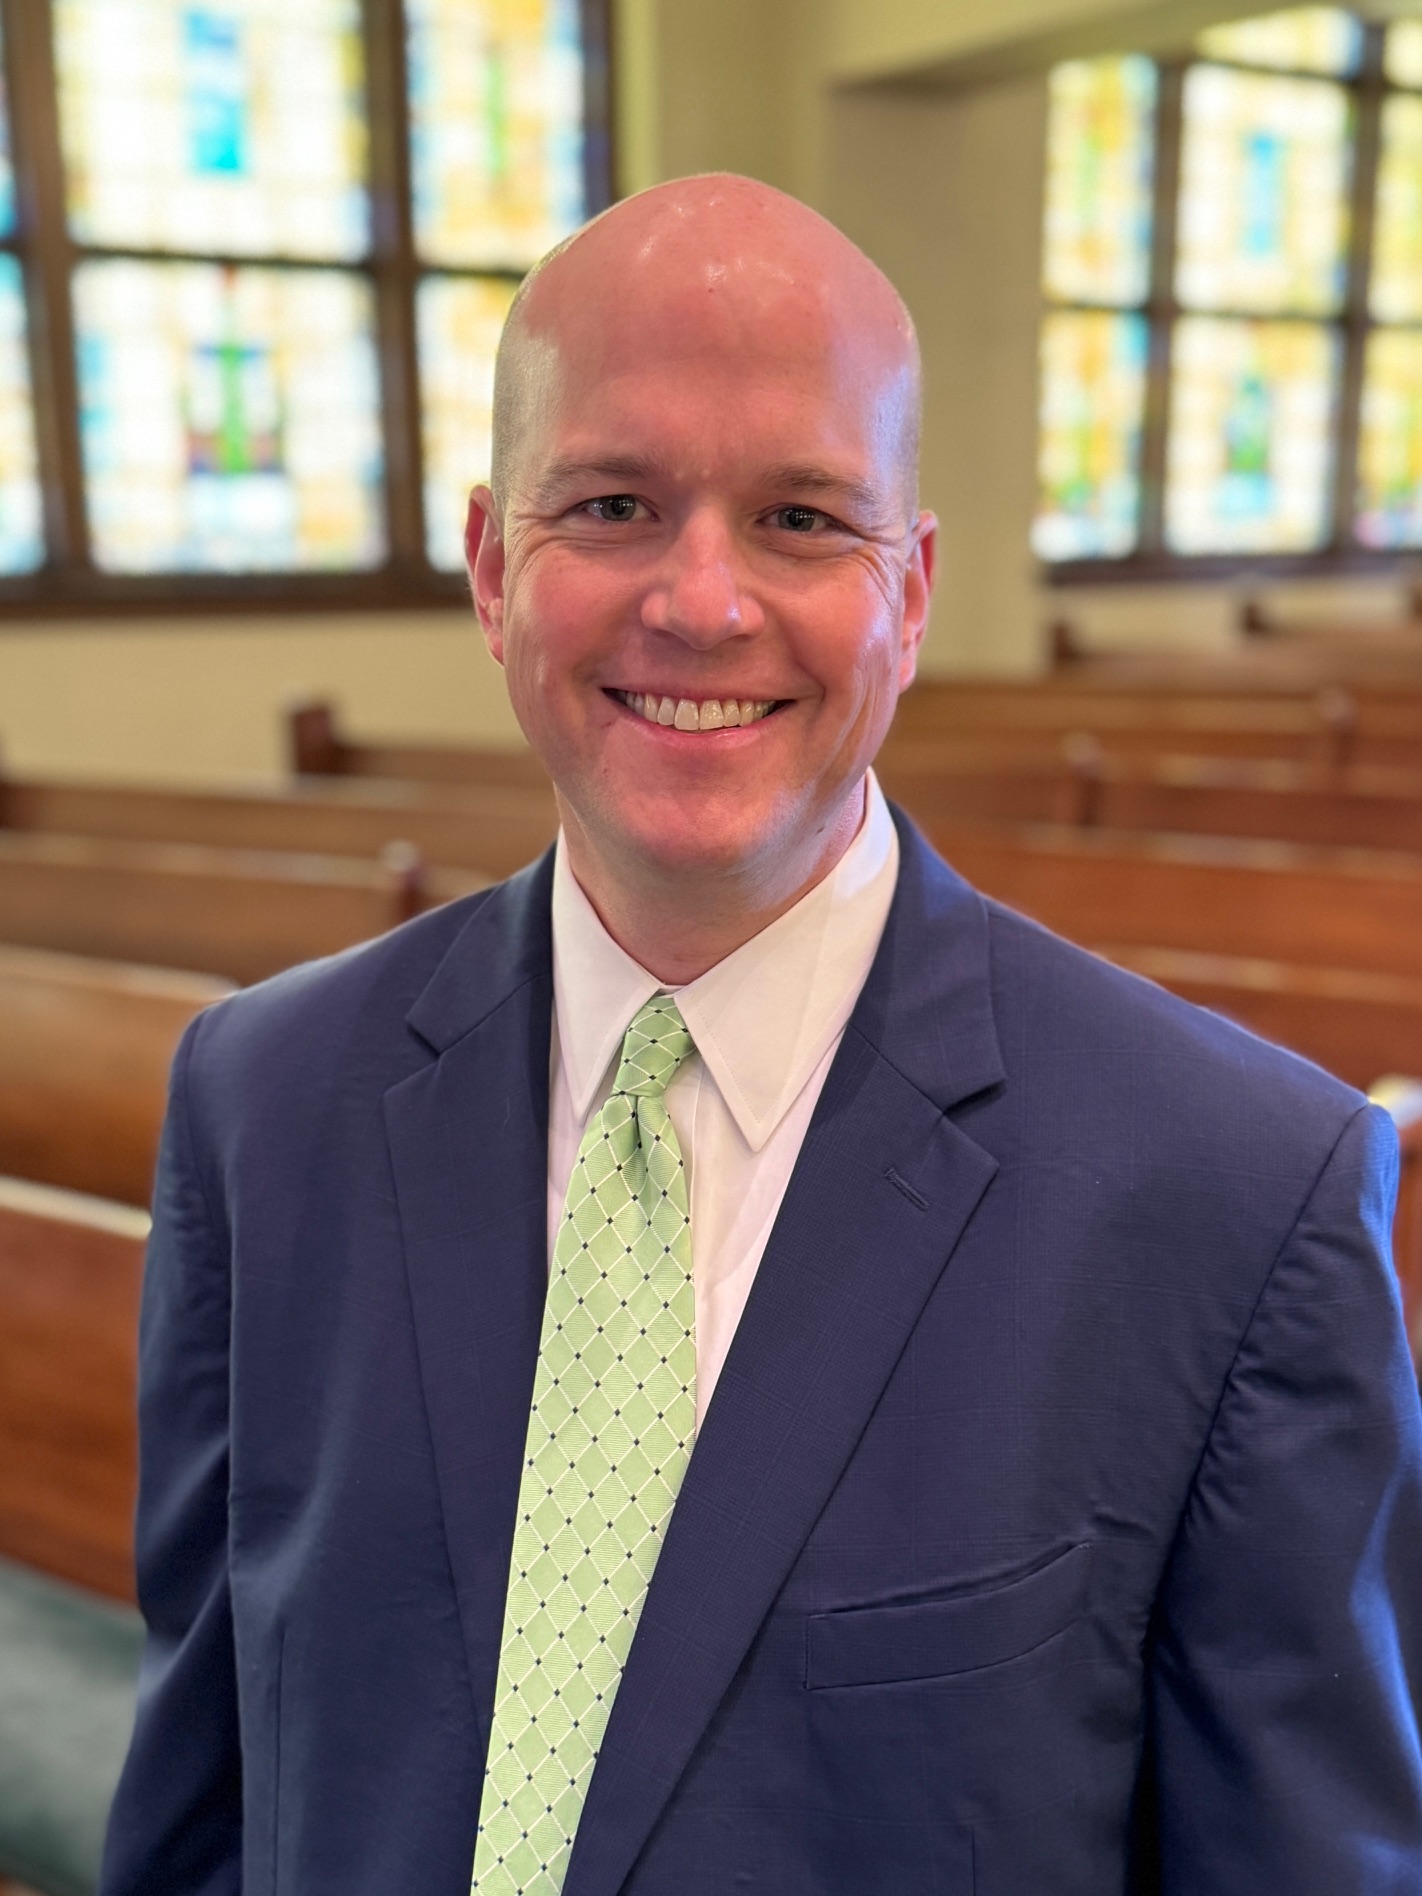 Nathan Edwards - Associate Pastor of Worship